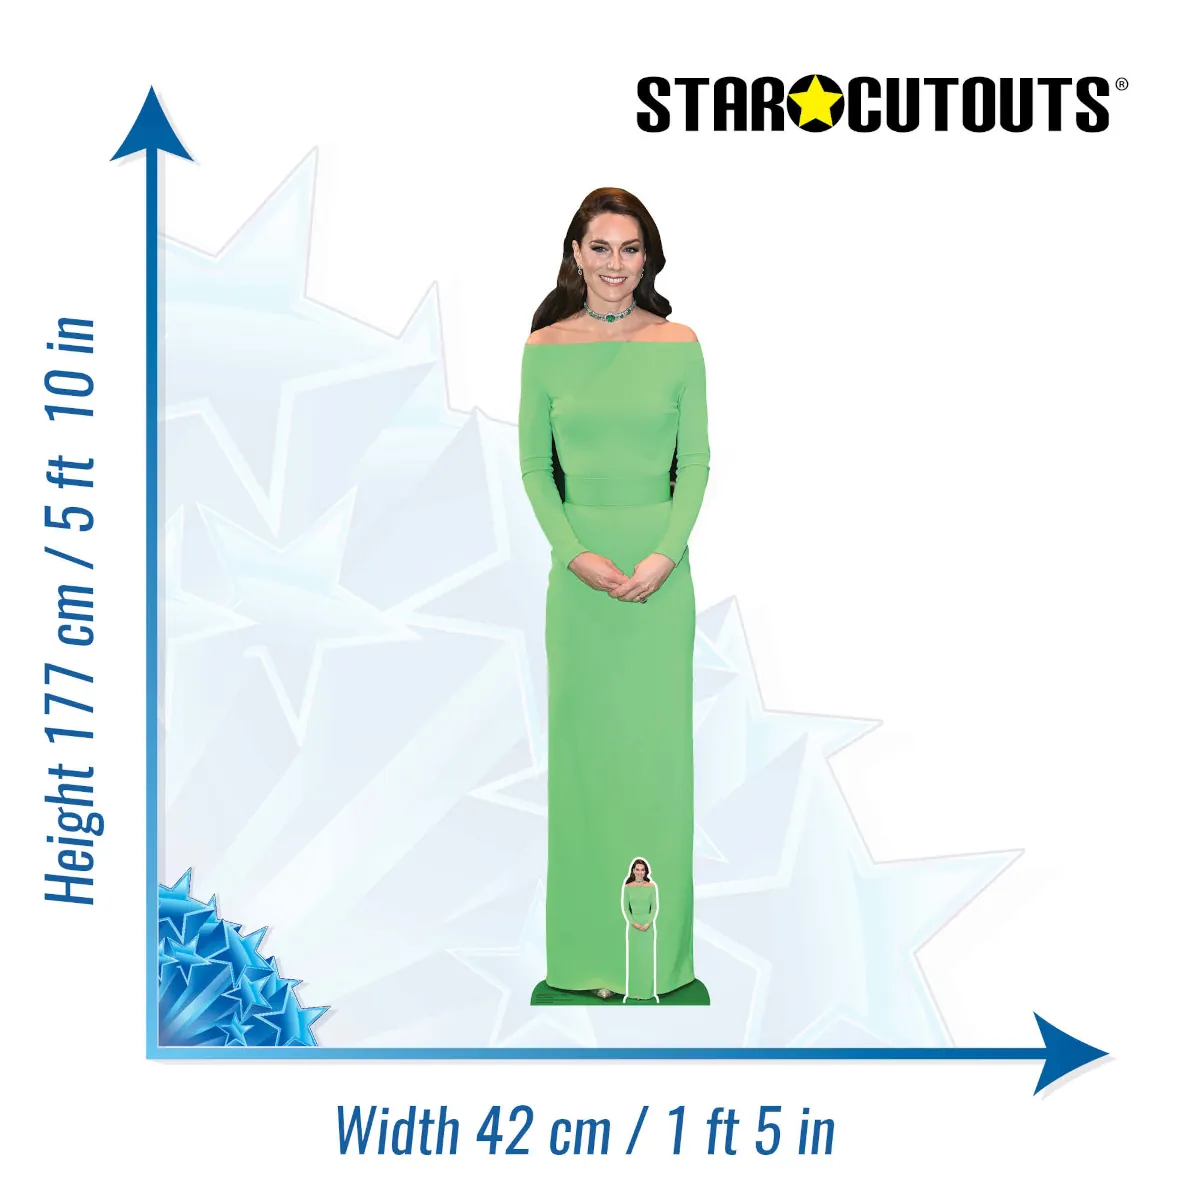 SC4214 Catherine Princess of Wales 'Green Dress' (British Royal) Lifesize + Mini Cardboard Cutout Standee Size